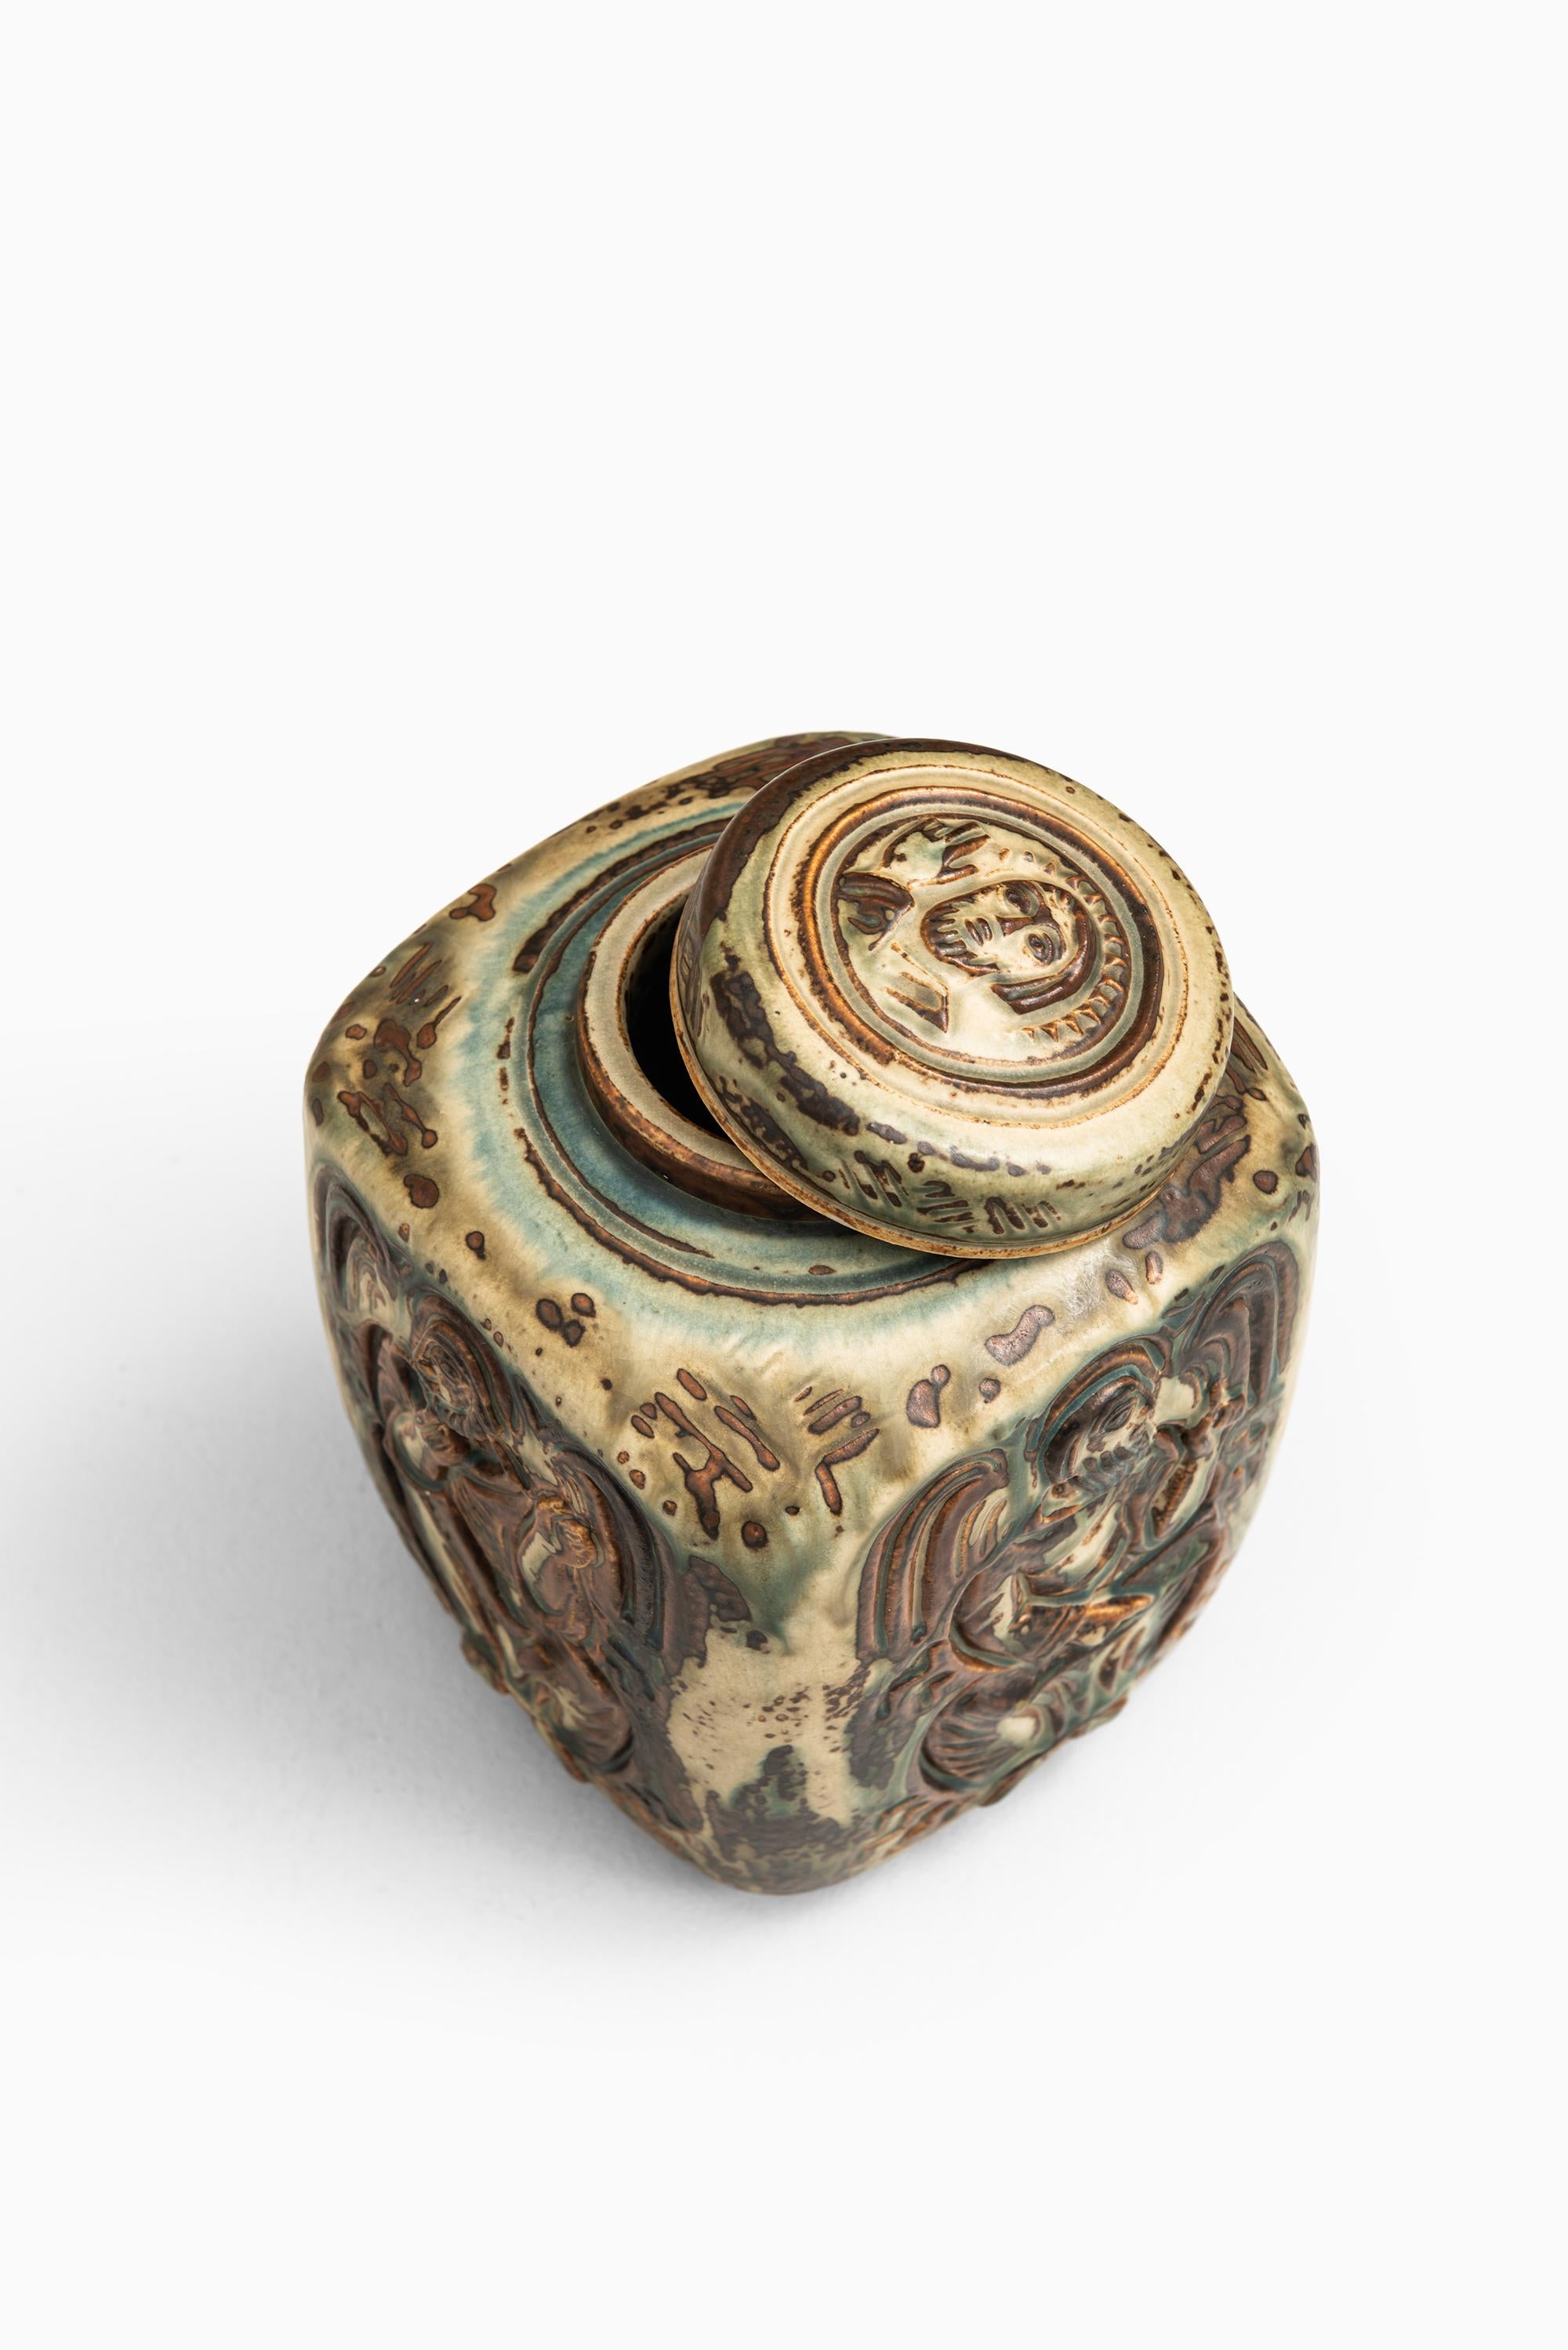 Jais Nielsen Ceramic Vase / Urn with Lid by Royal Copenhagen in Denmark In Good Condition For Sale In Limhamn, Skåne län